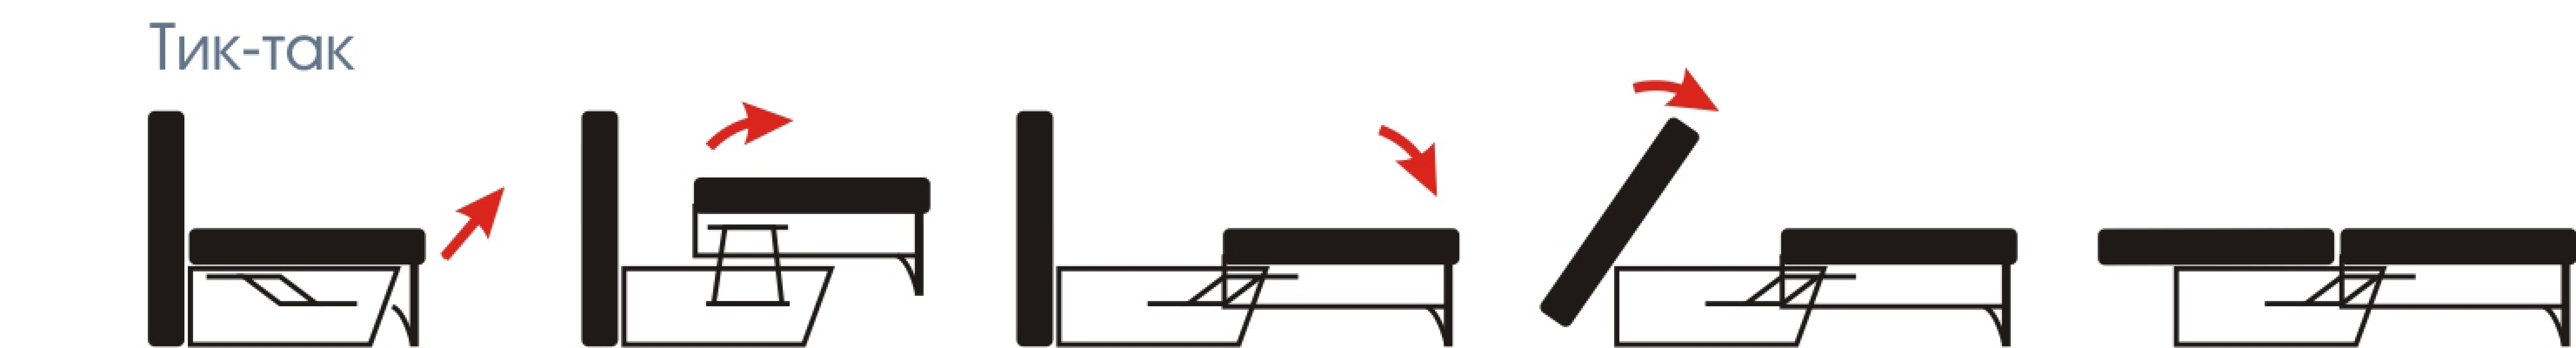 механизм сборки дивана французская раскладушка